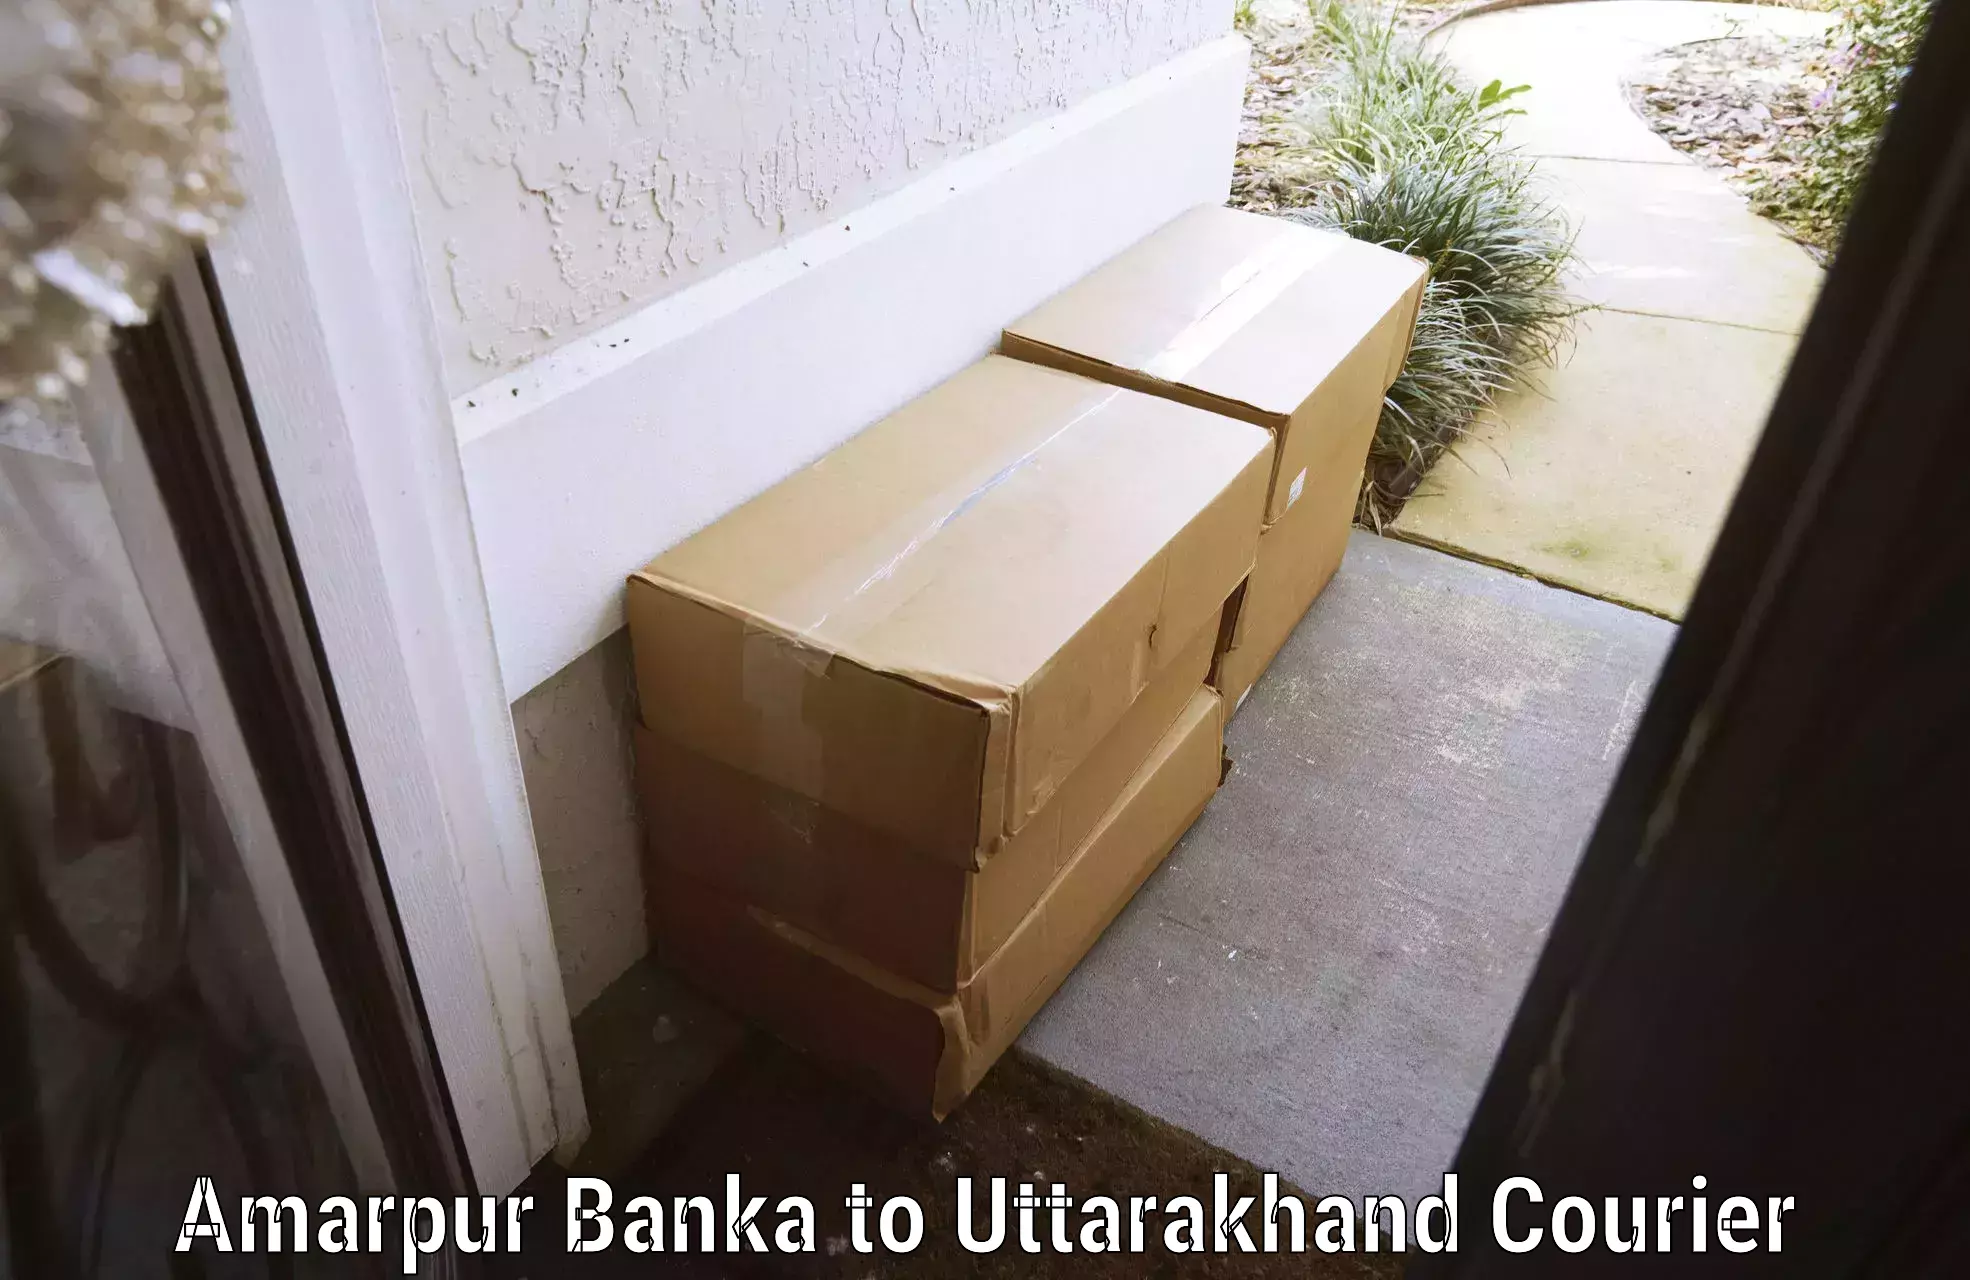 Same day luggage service Amarpur Banka to Uttarakhand